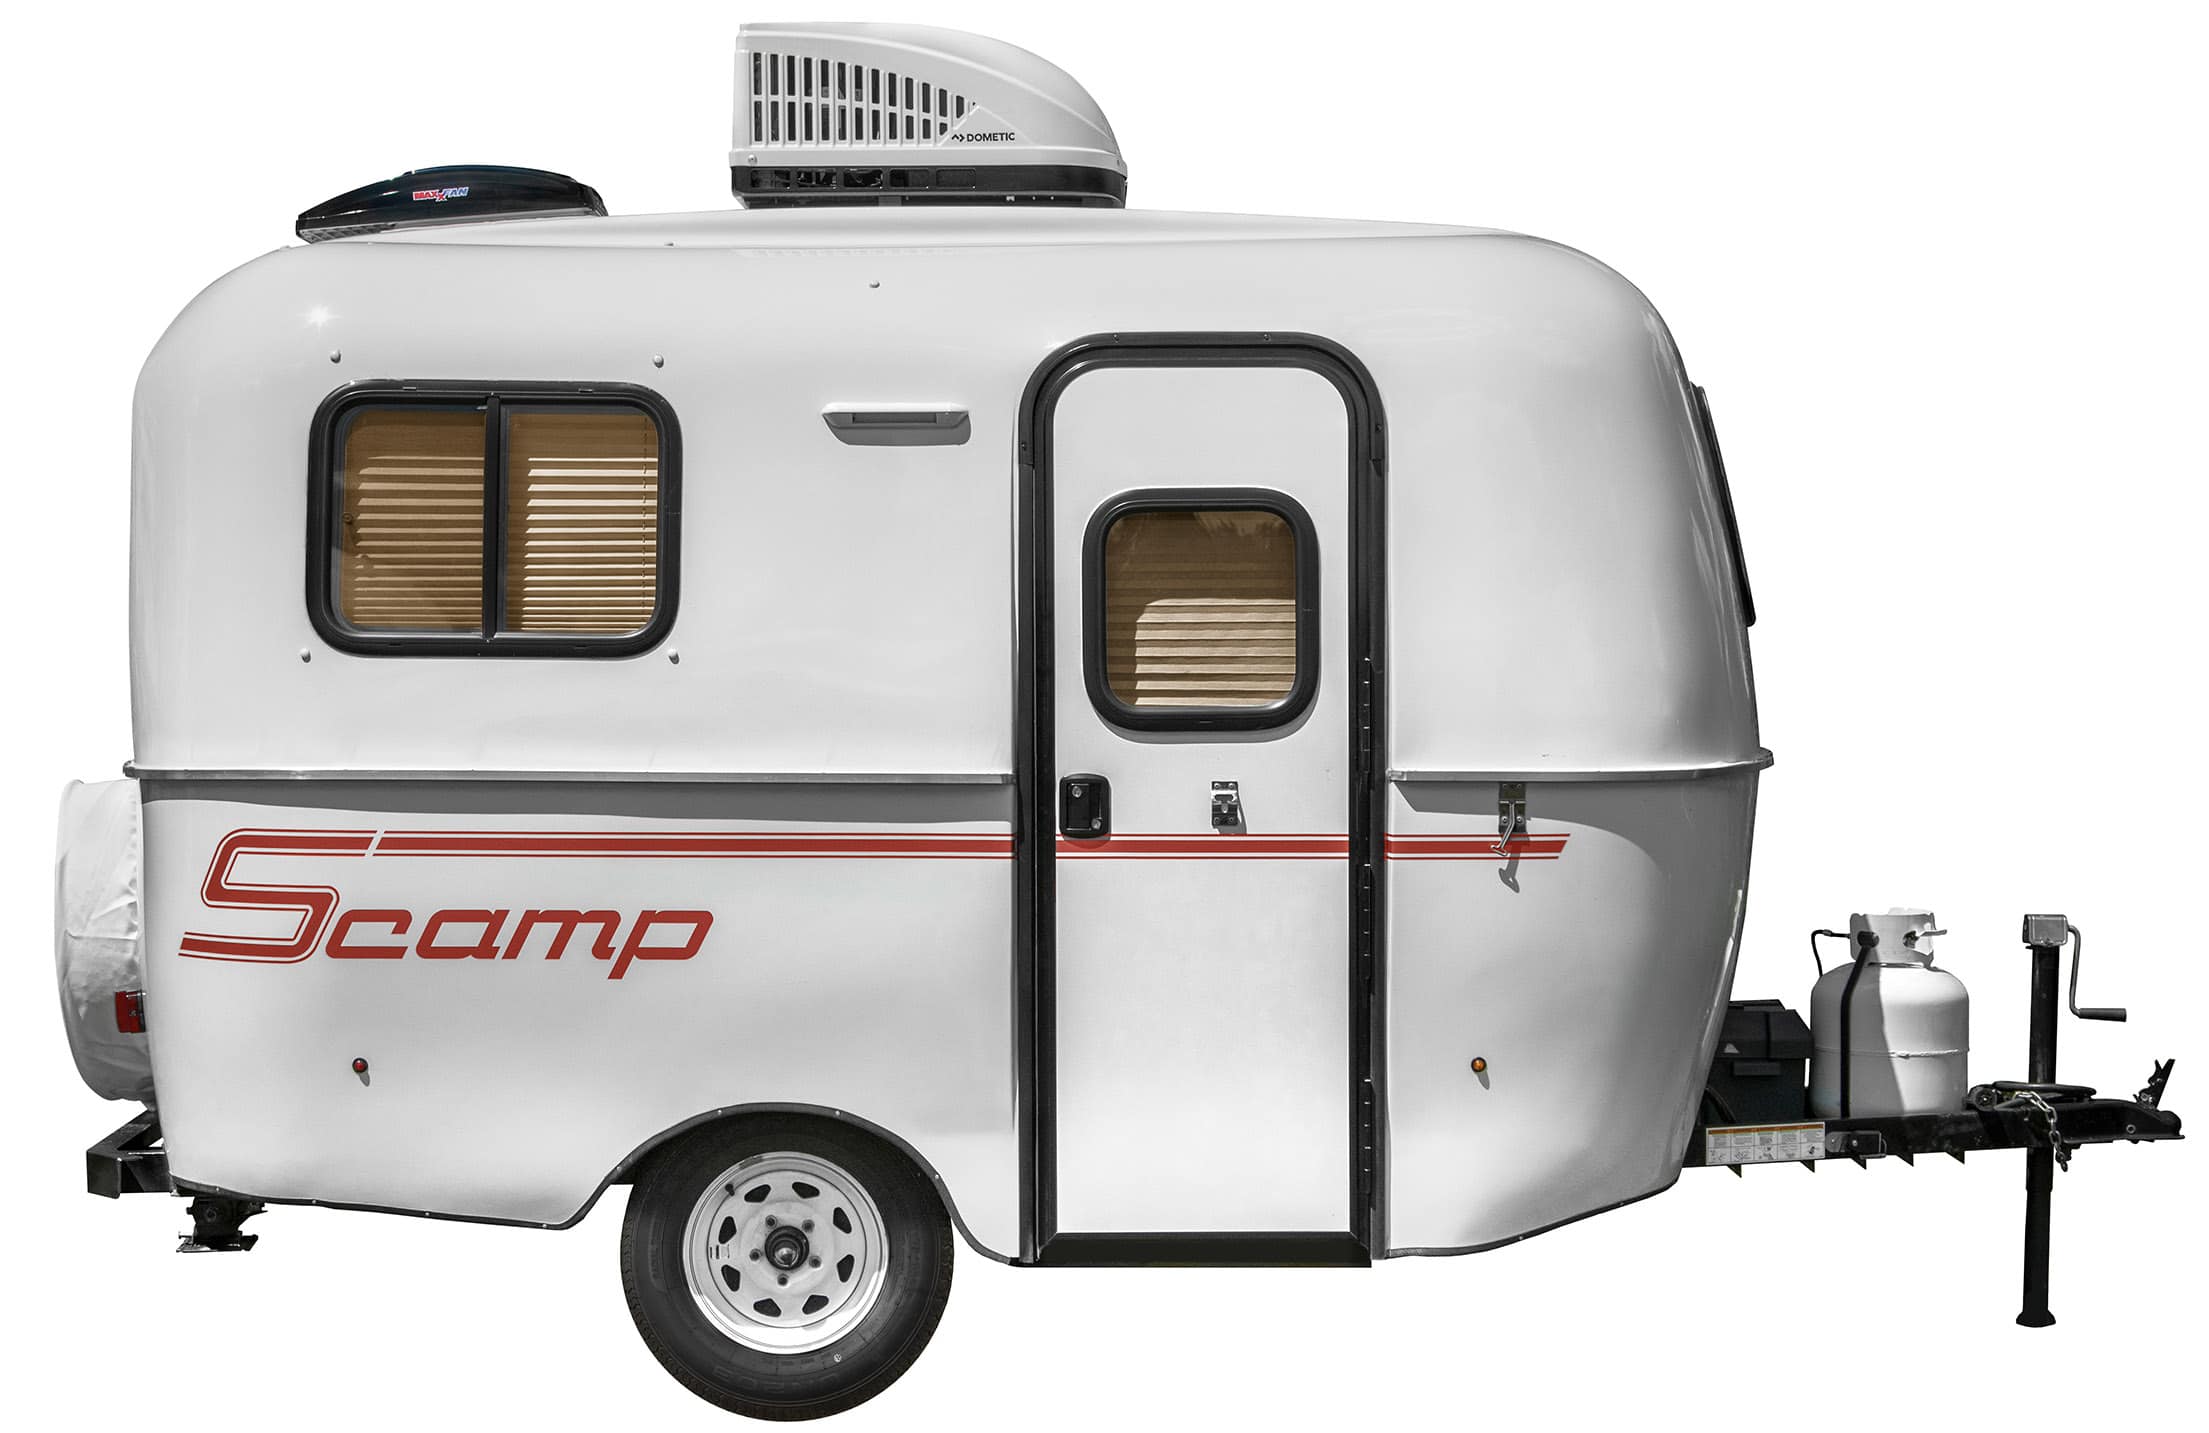 skamper travel trailer